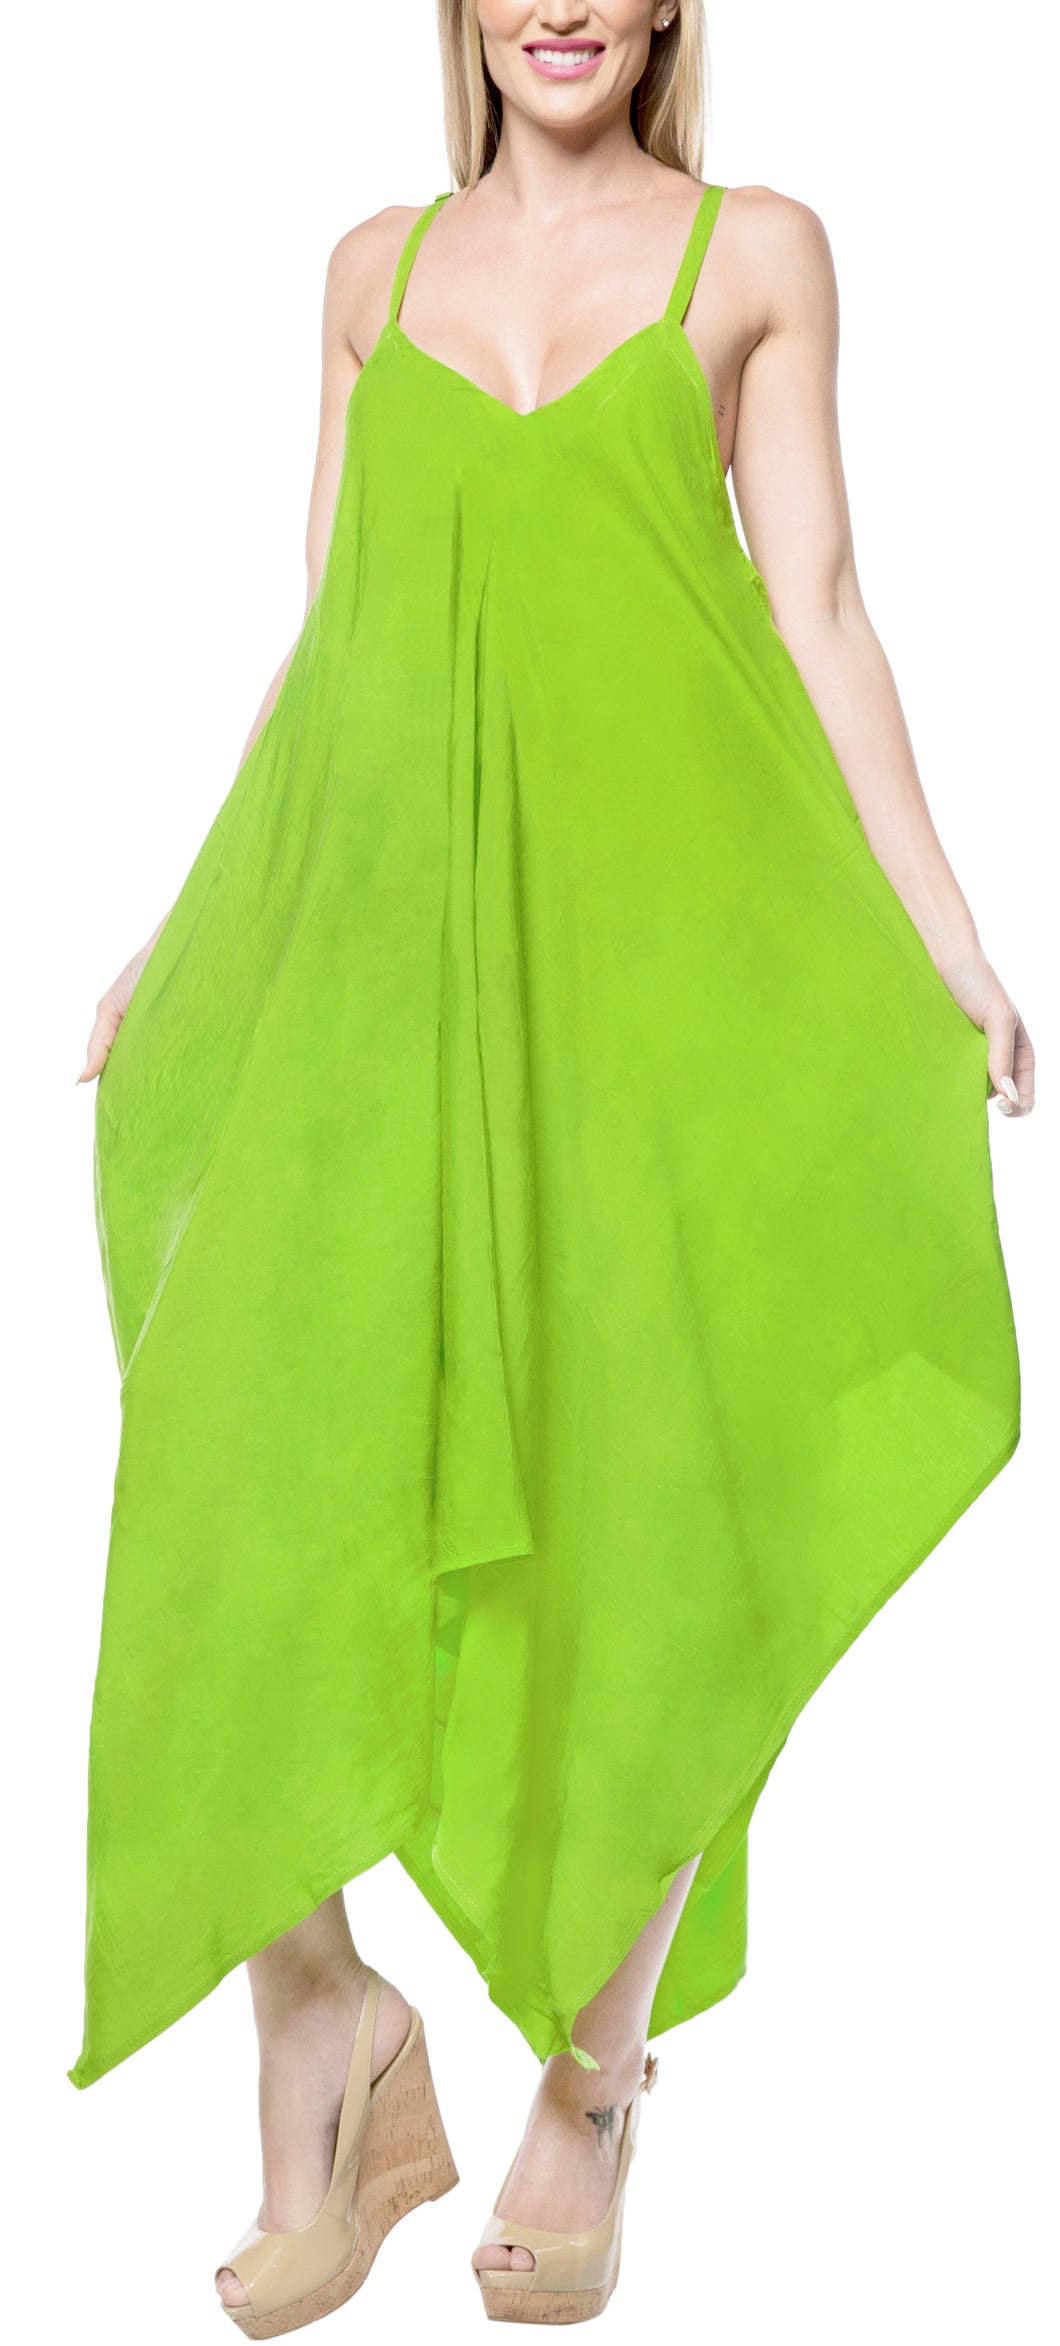 la-leela-beach-dress-solid-tropical-halter-swimsuit-osfm-14-16-parrot-green_3424